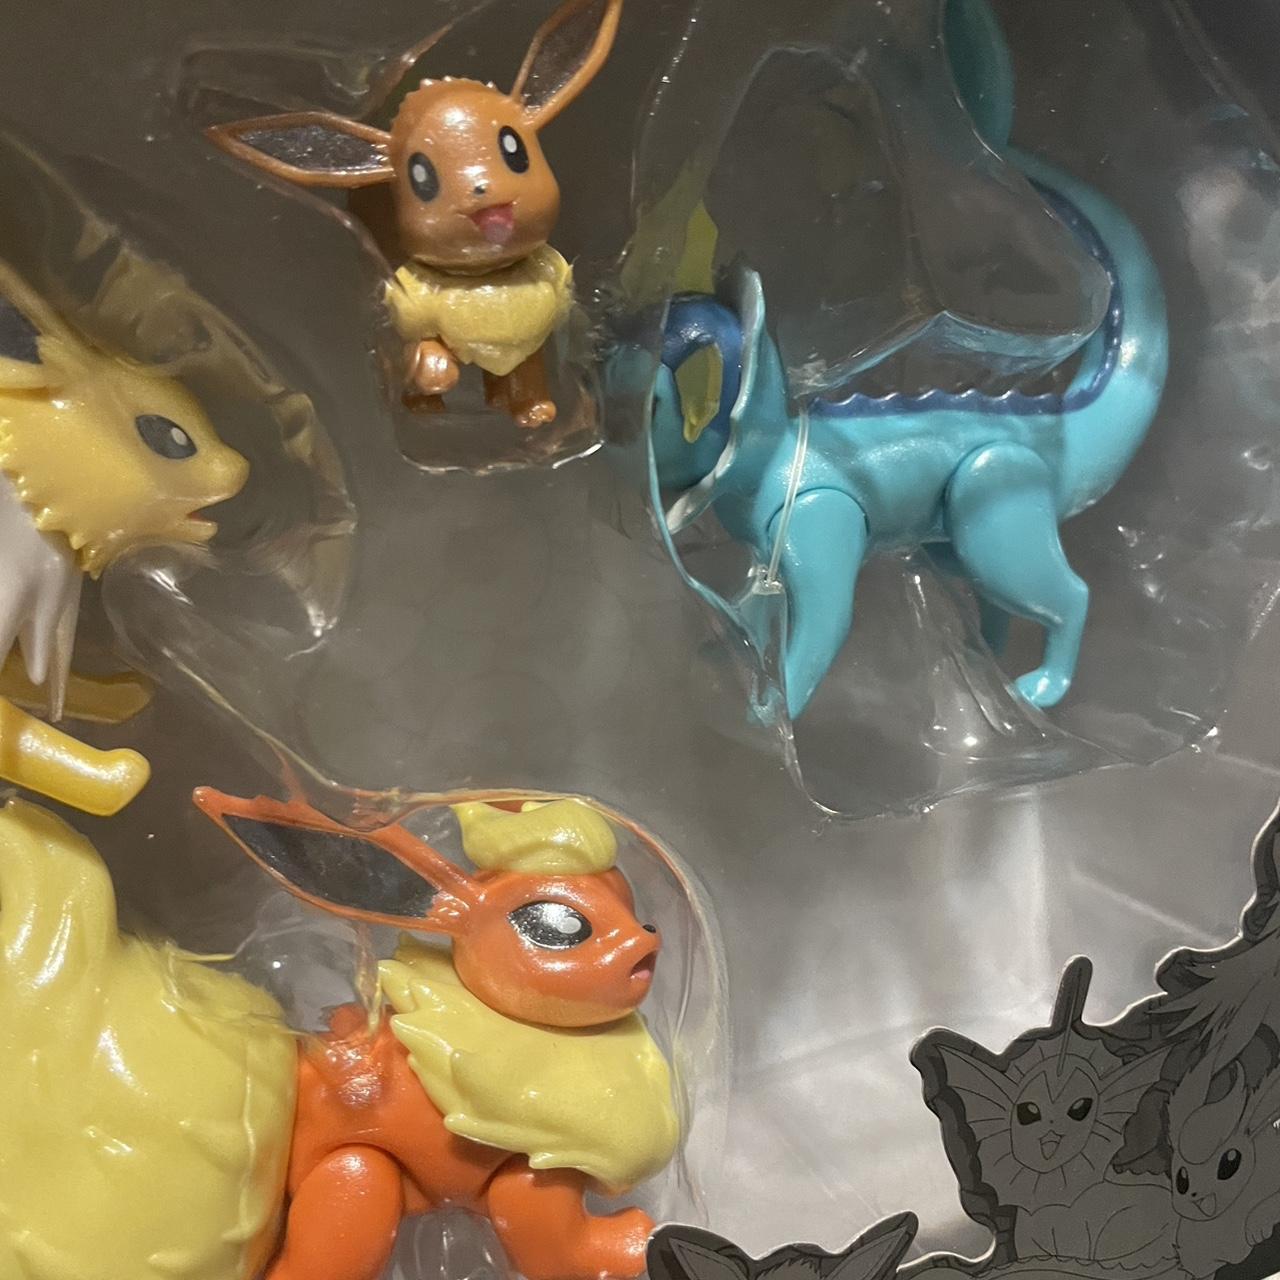  Pokemon - Select Evolution Multipack - Action Figure Series Set  (Eevee, Jolteon, Vaporeon & Flareon) : Toys & Games